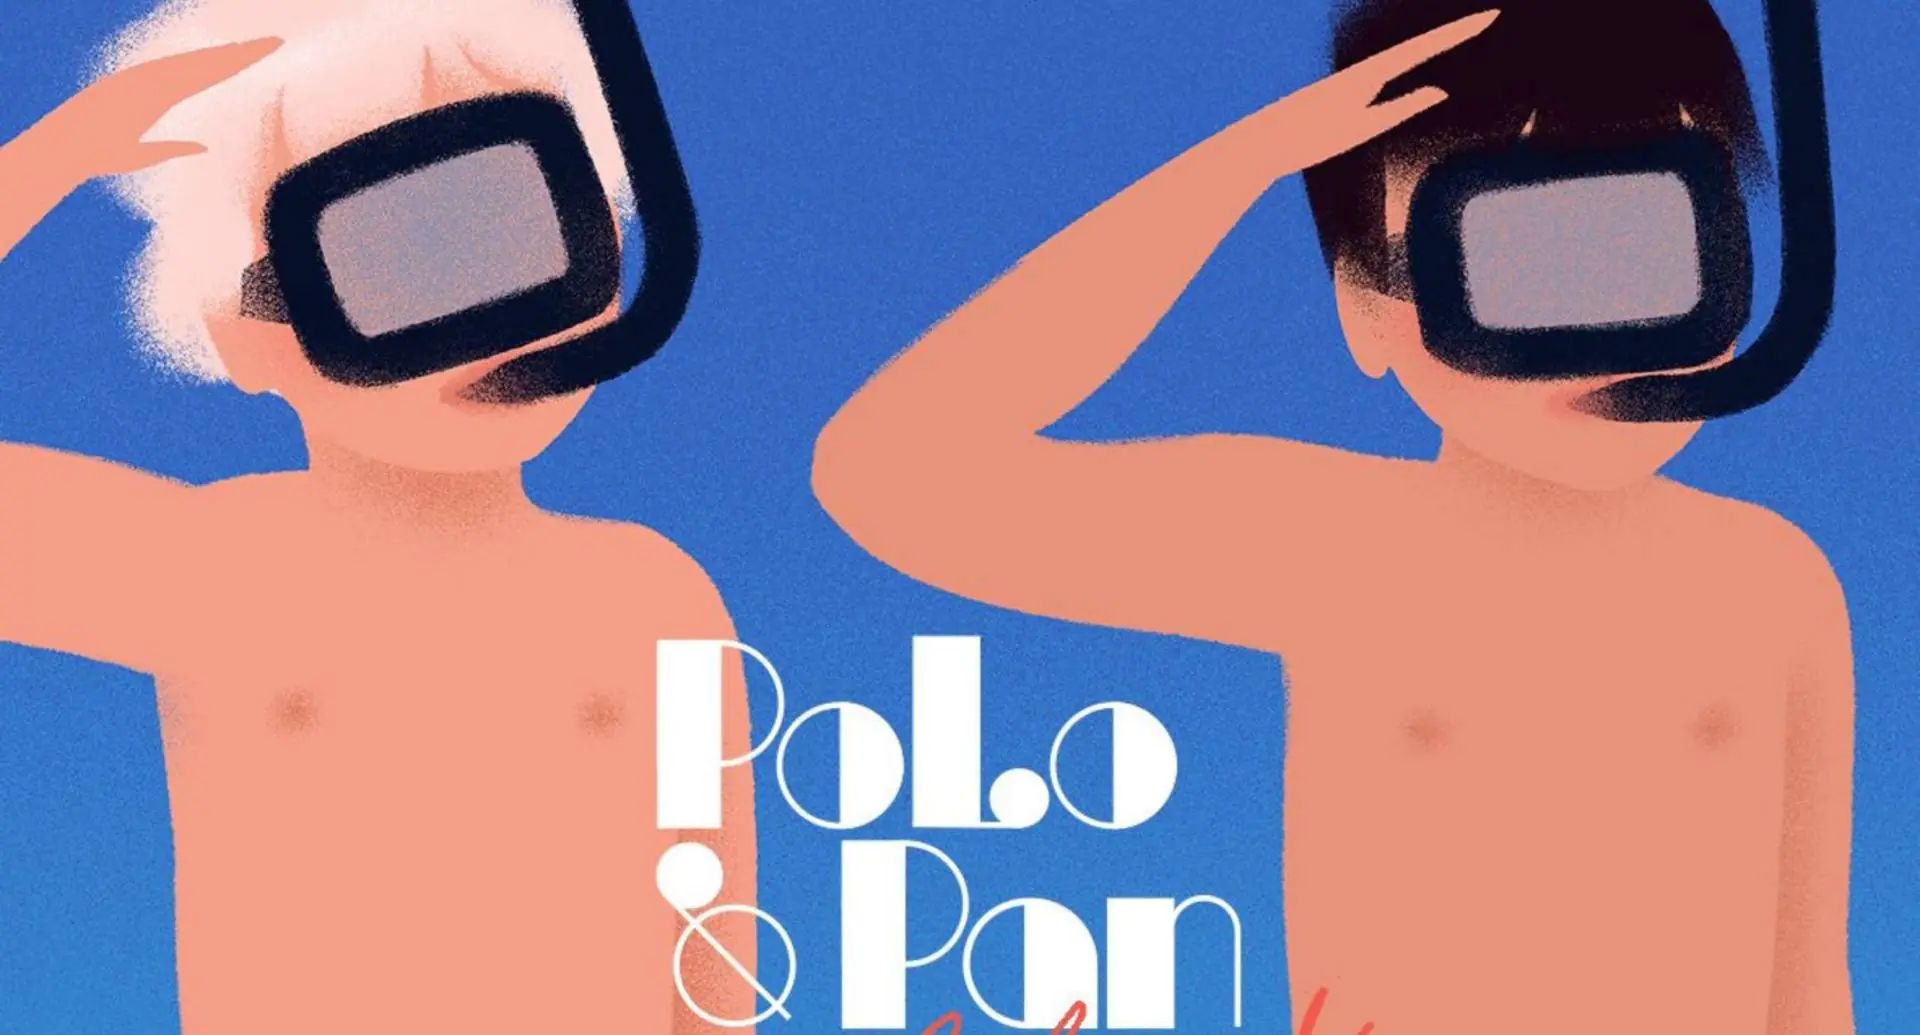 Polo and Pan - Feel Good - Clip